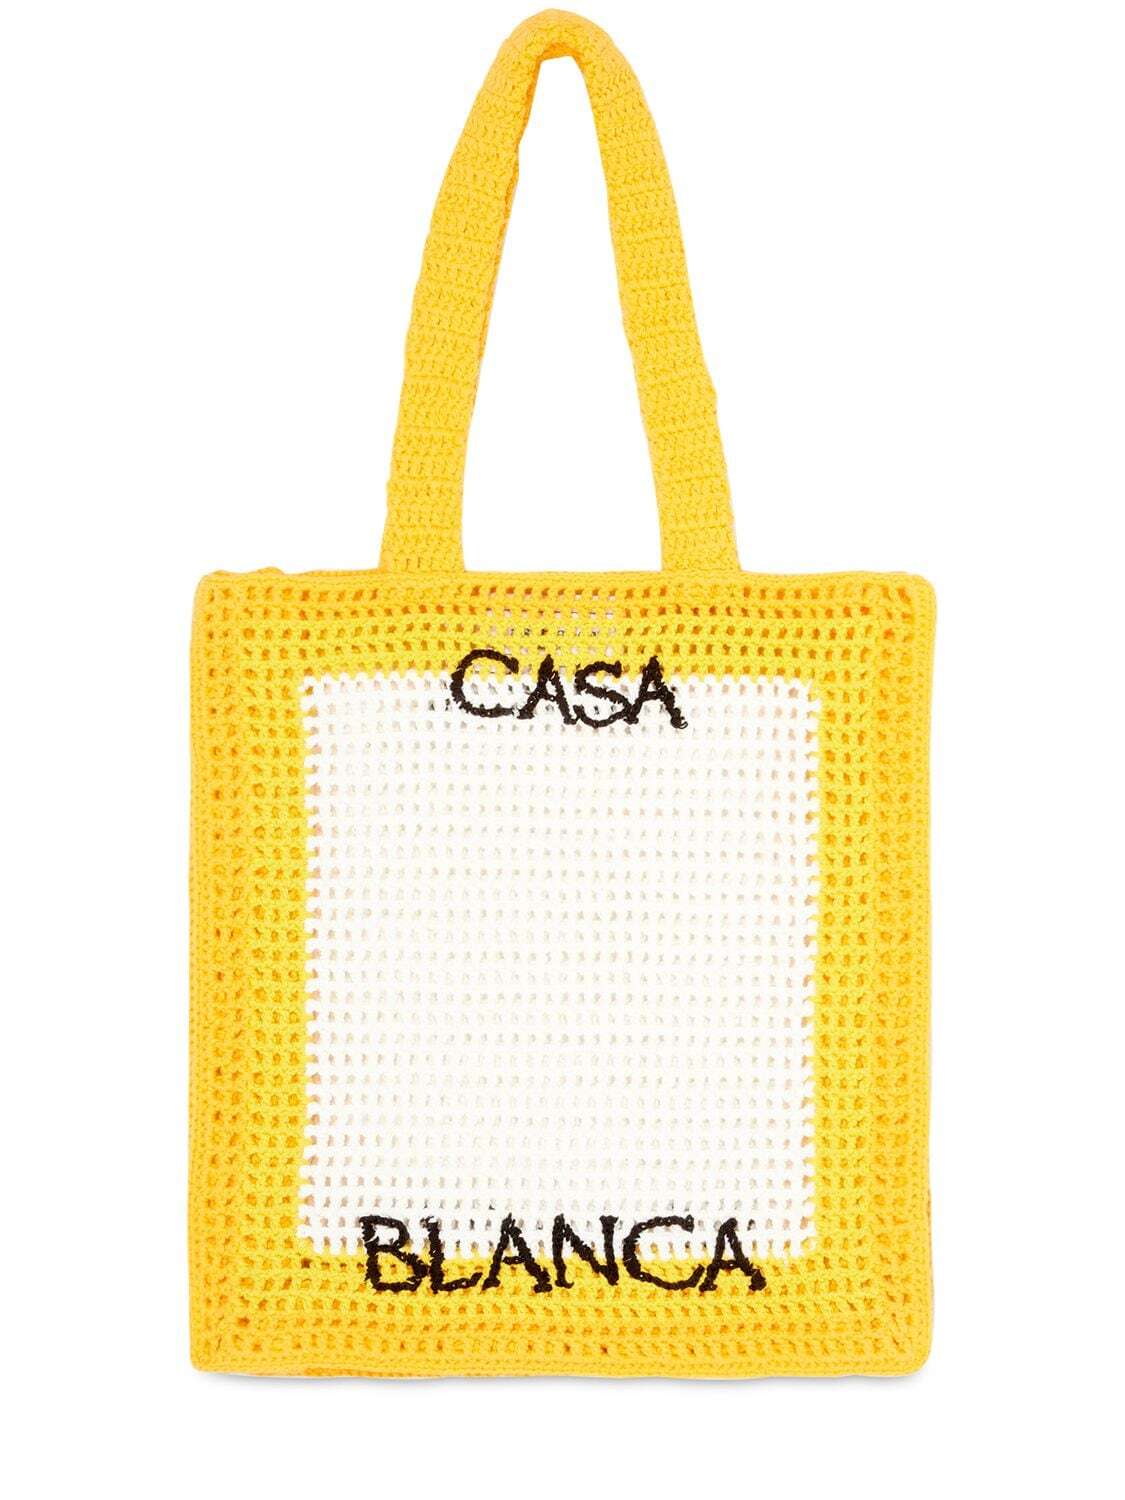 CASABLANCA Crochet Cuzimala Tote Bag in white / yellow